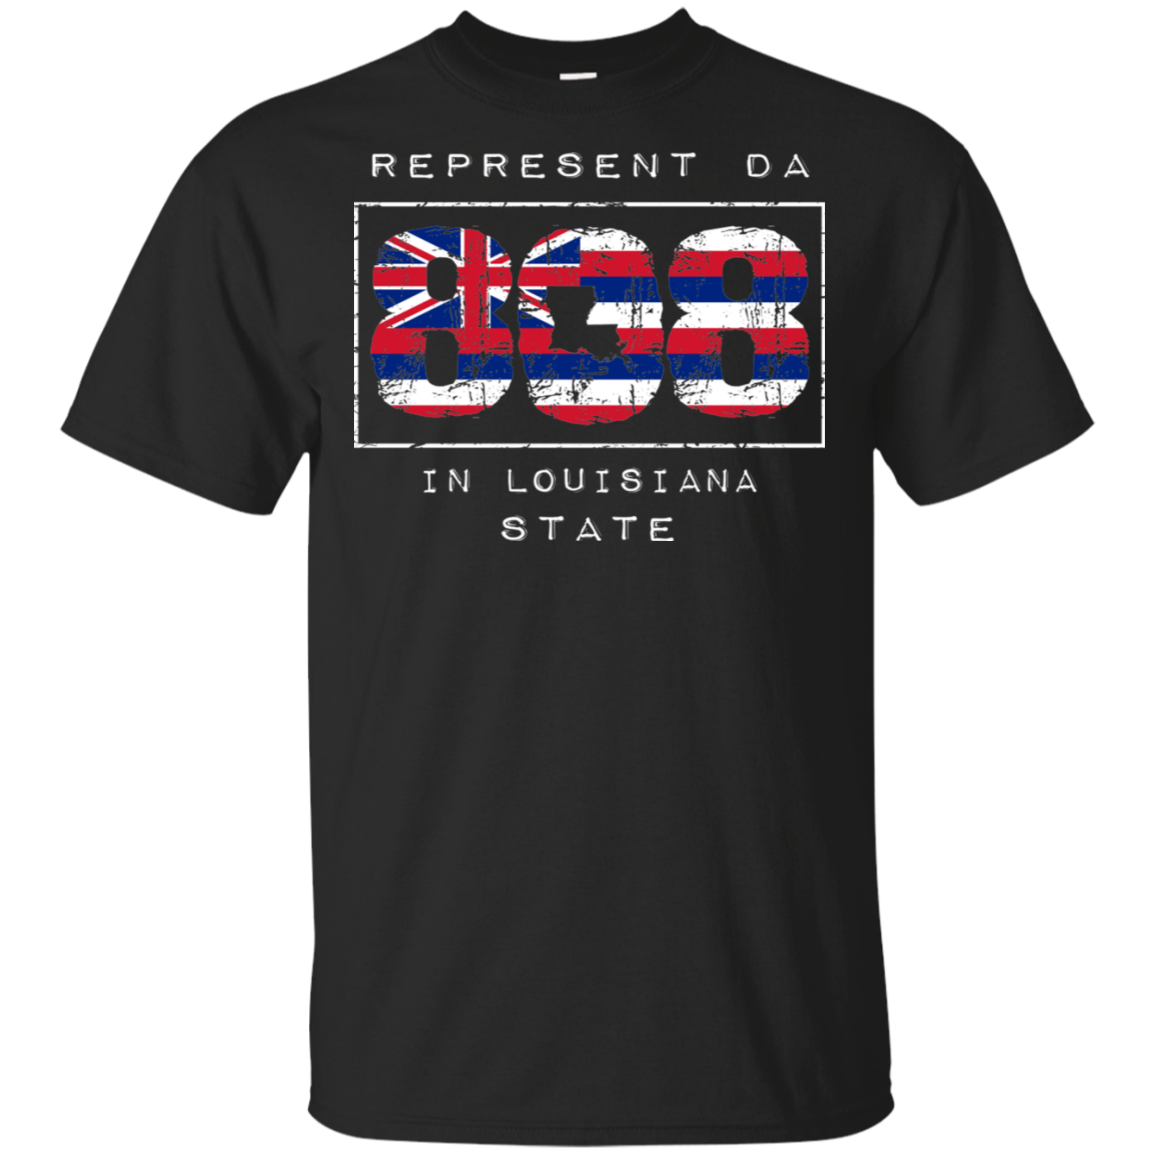 Rep Da 808 In Louisiana State Ultra Cotton T-Shirt, T-Shirts, Hawaii Nei All Day